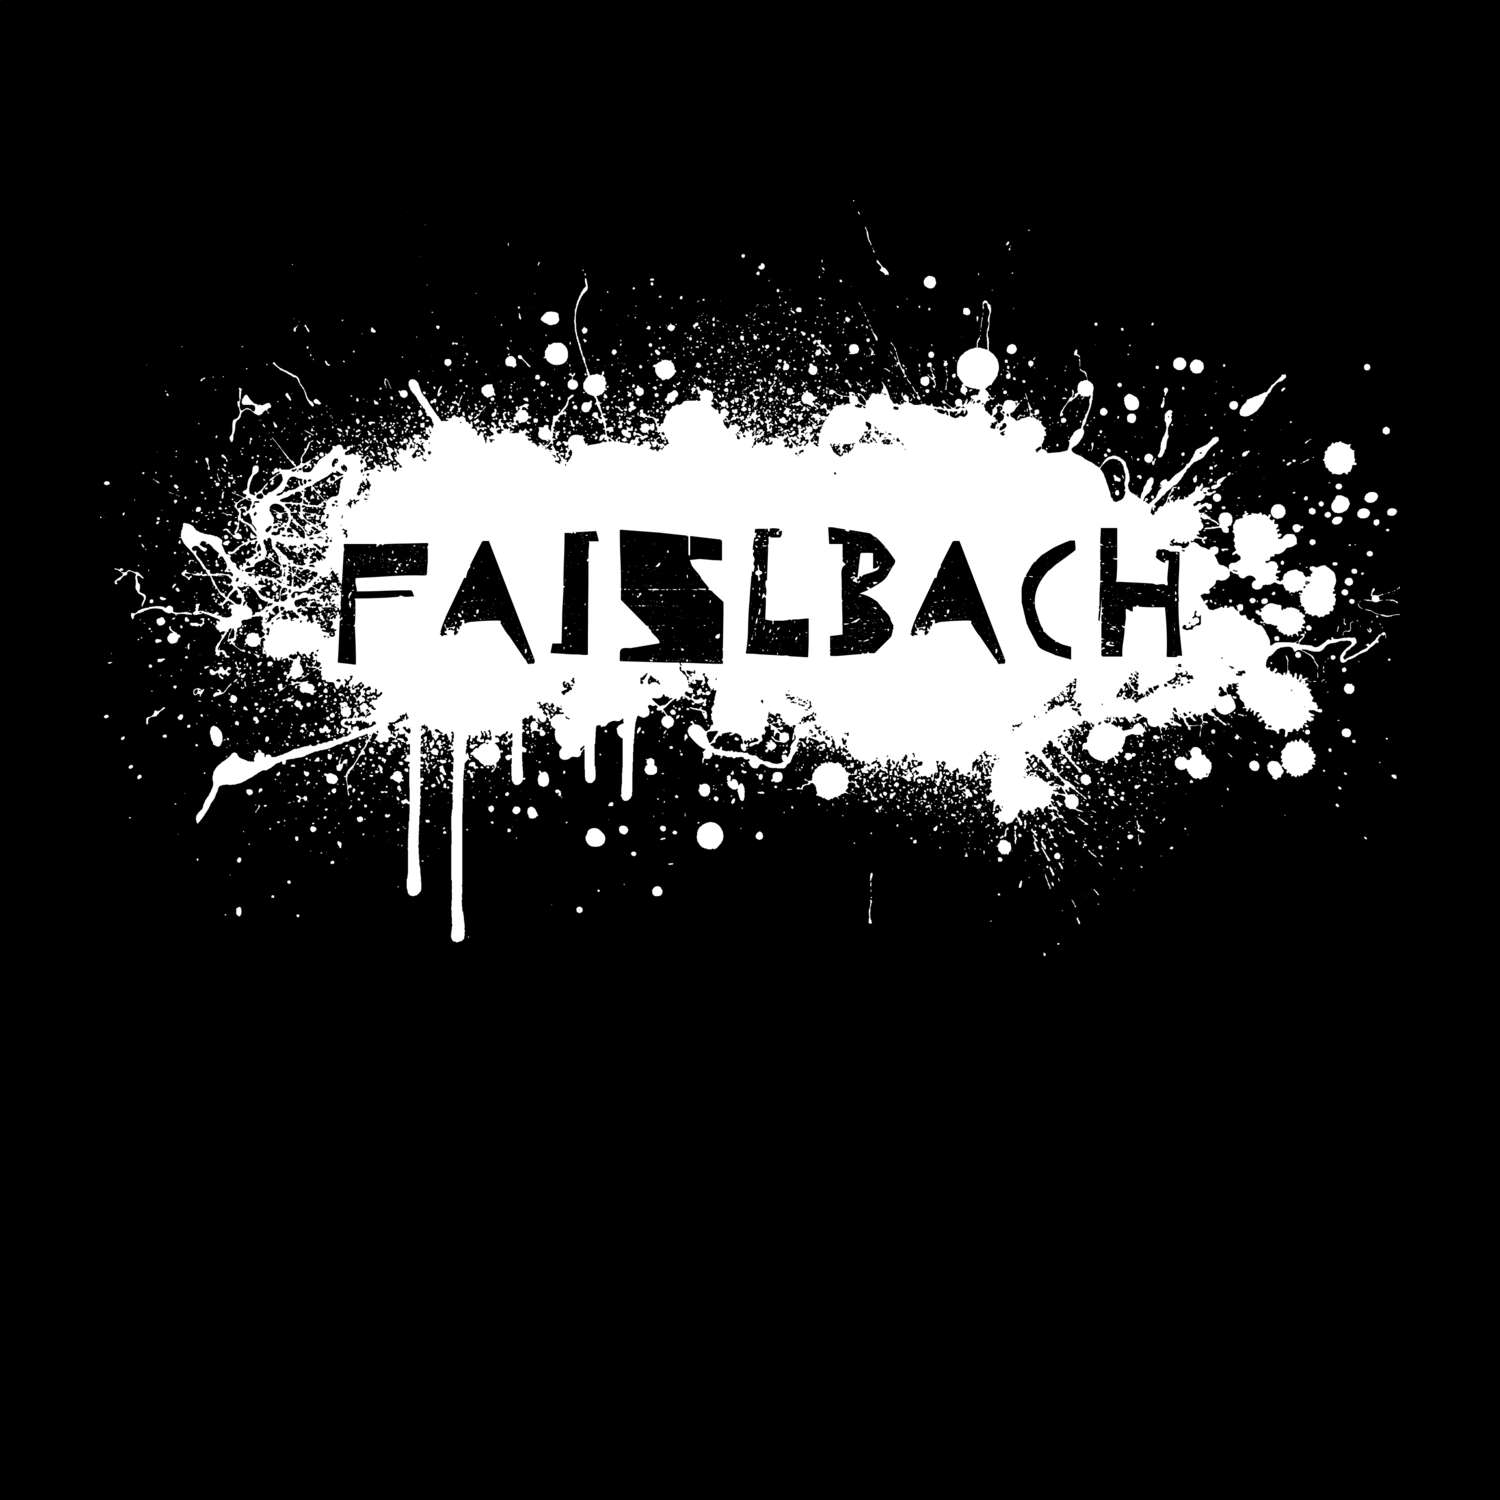 Faislbach T-Shirt »Paint Splash Punk«